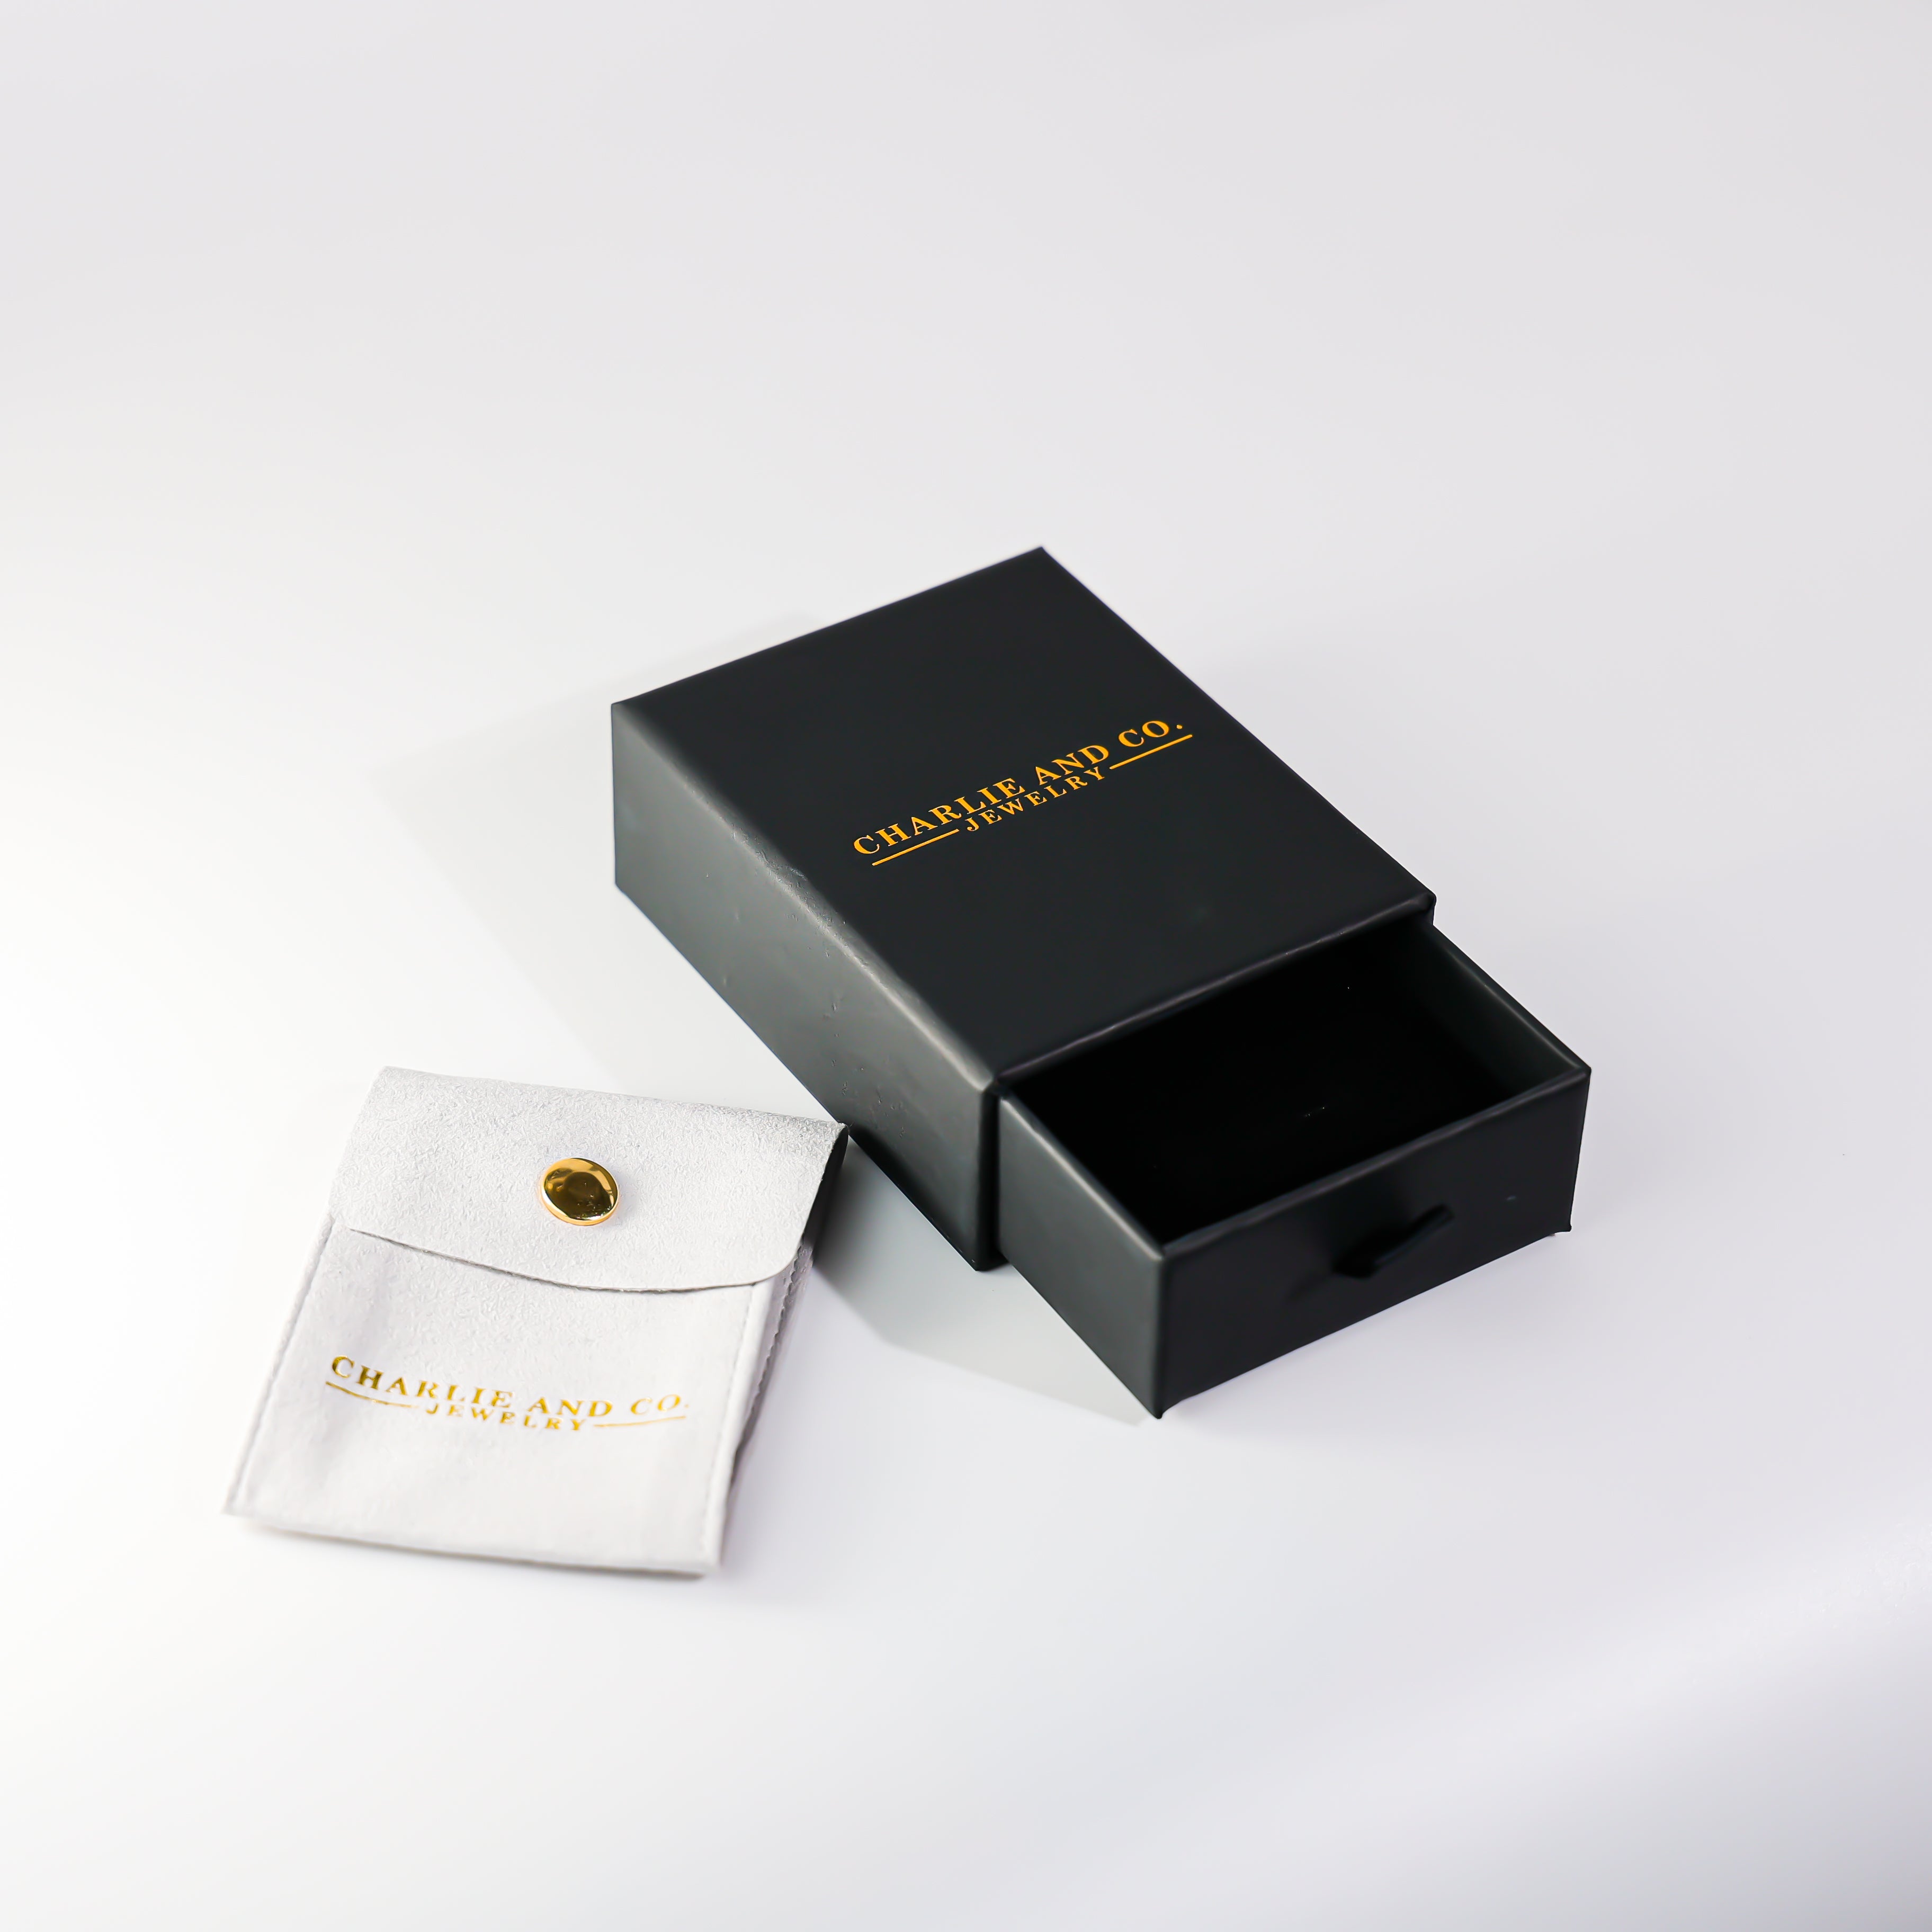 14K Yellow Gold 'PRINCESS' Pendant - Charlie & Co. Jewelry